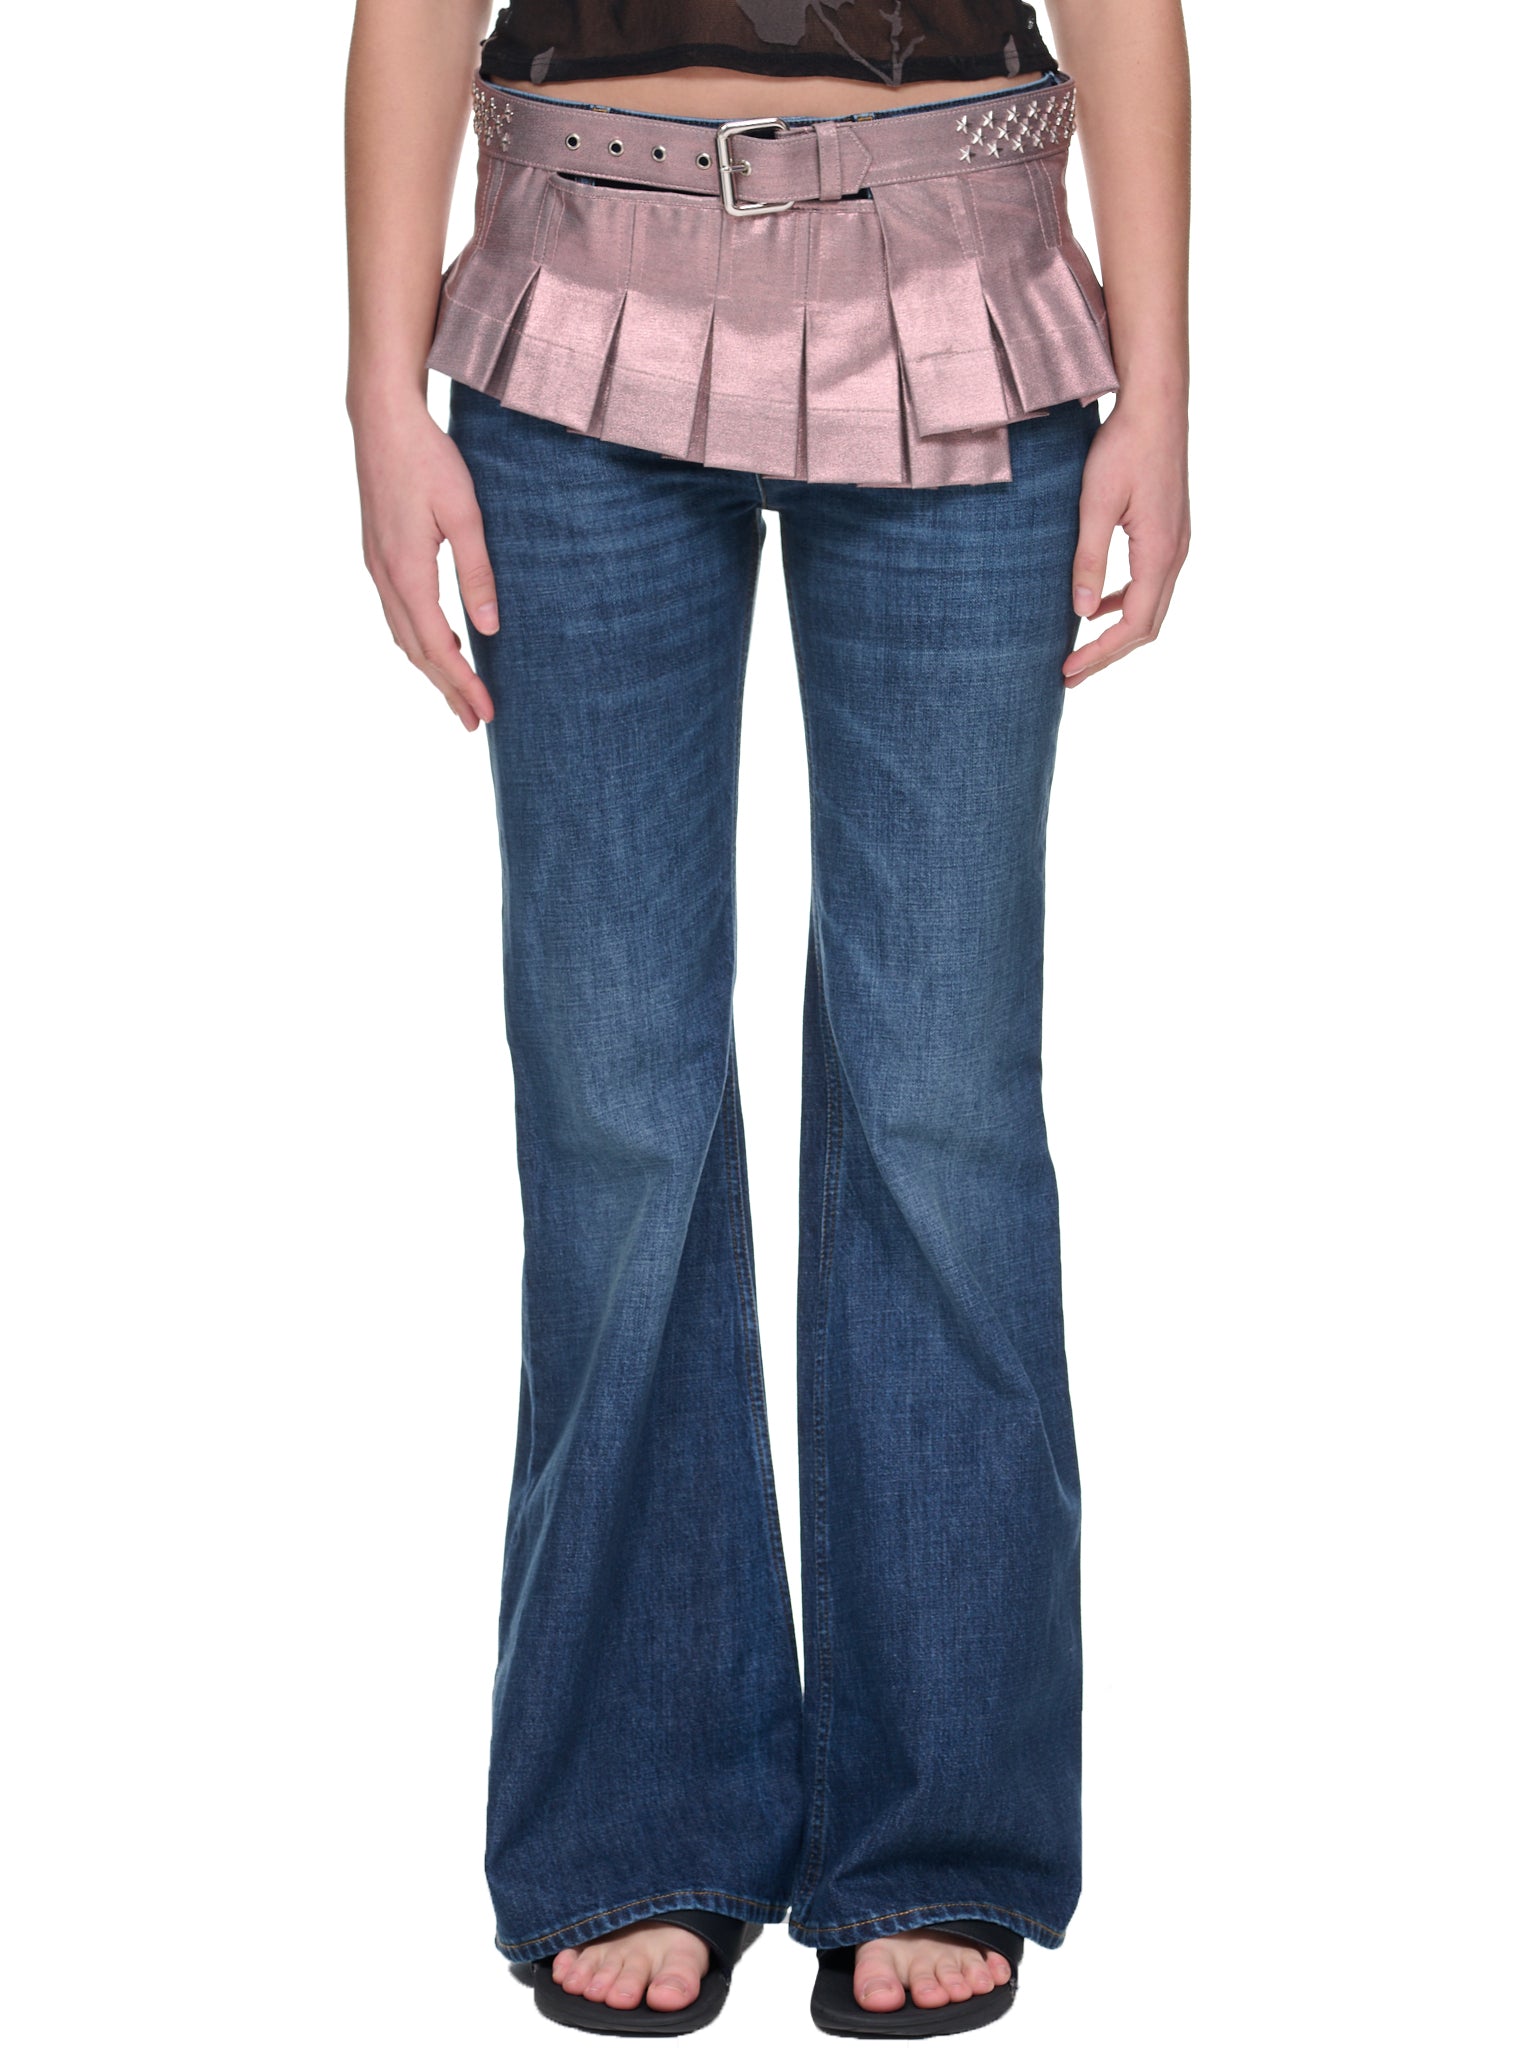 Metallic Denim Belt Skirt (XX1243-METALLIC-BLUSH)